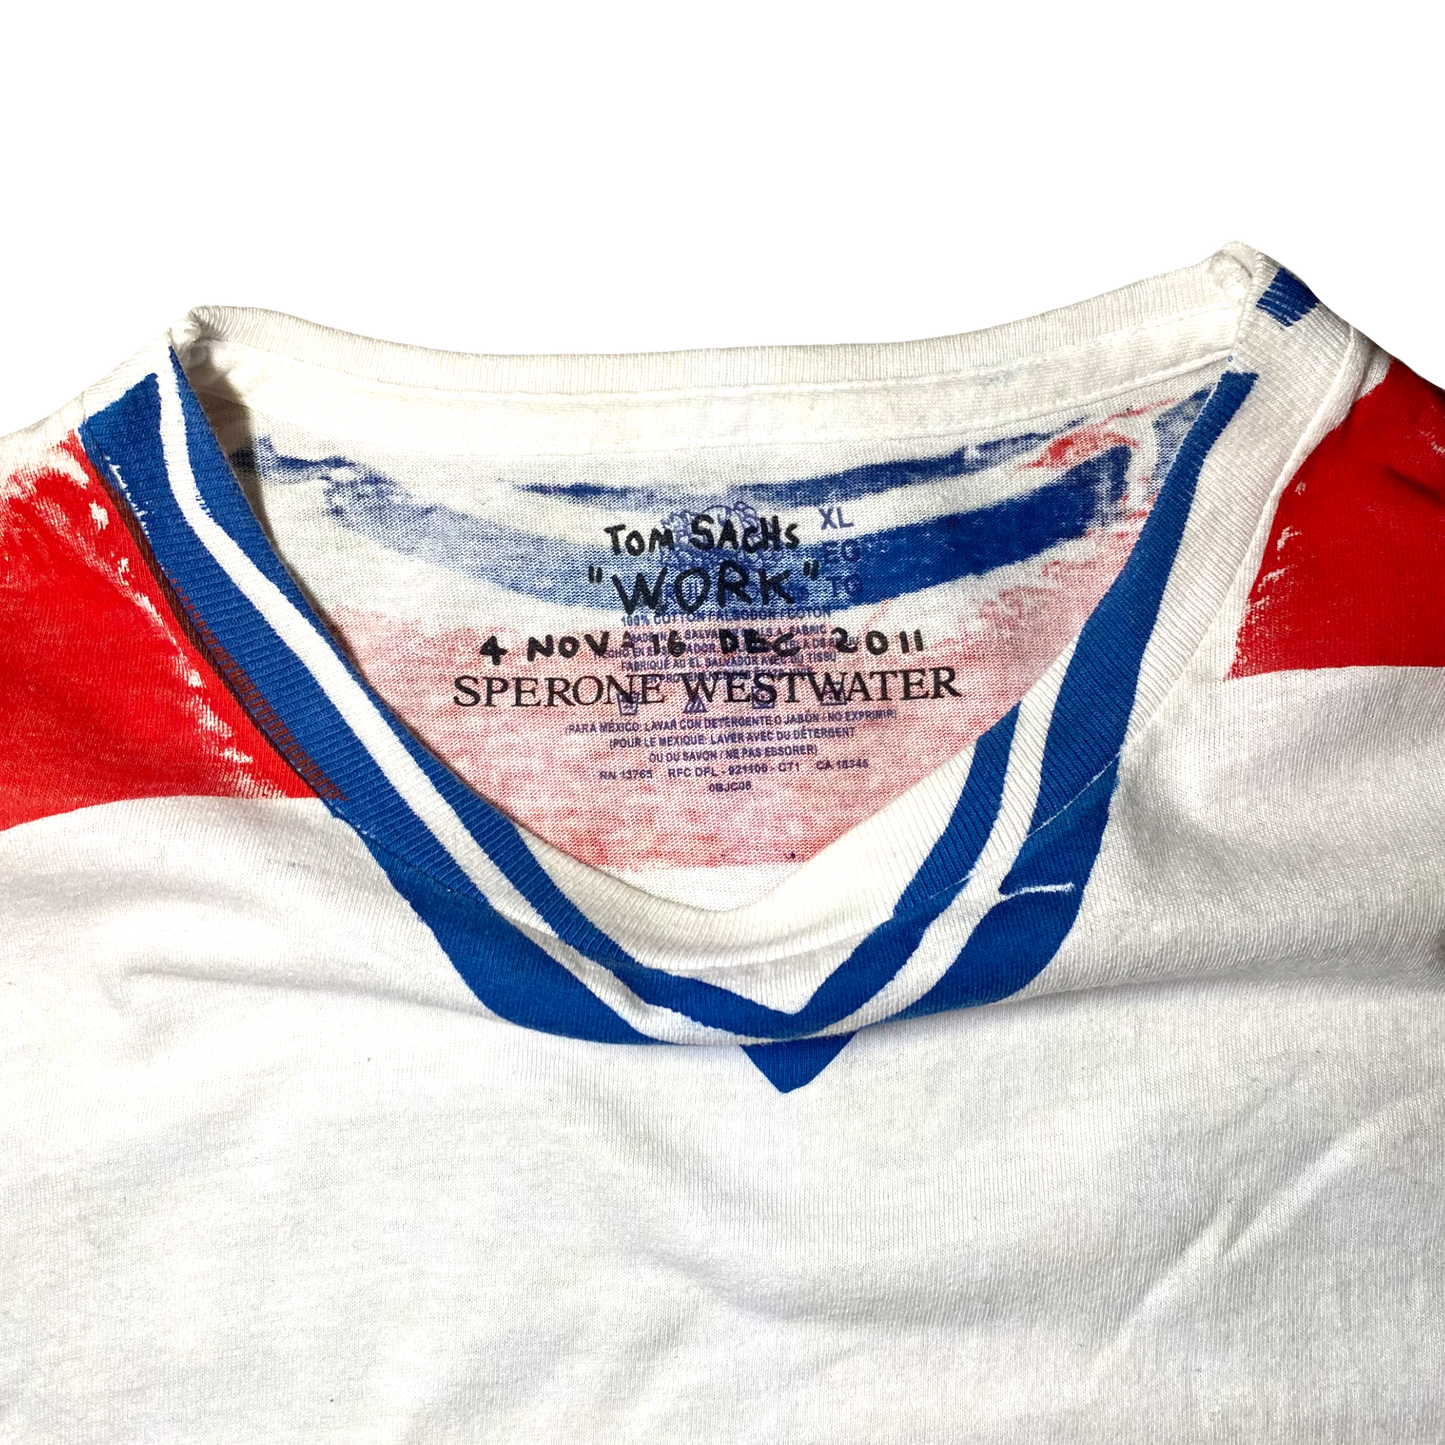 Tom Sach's - 2011 "Work" James Brown Canadiens New York Pop Up T-Shirt